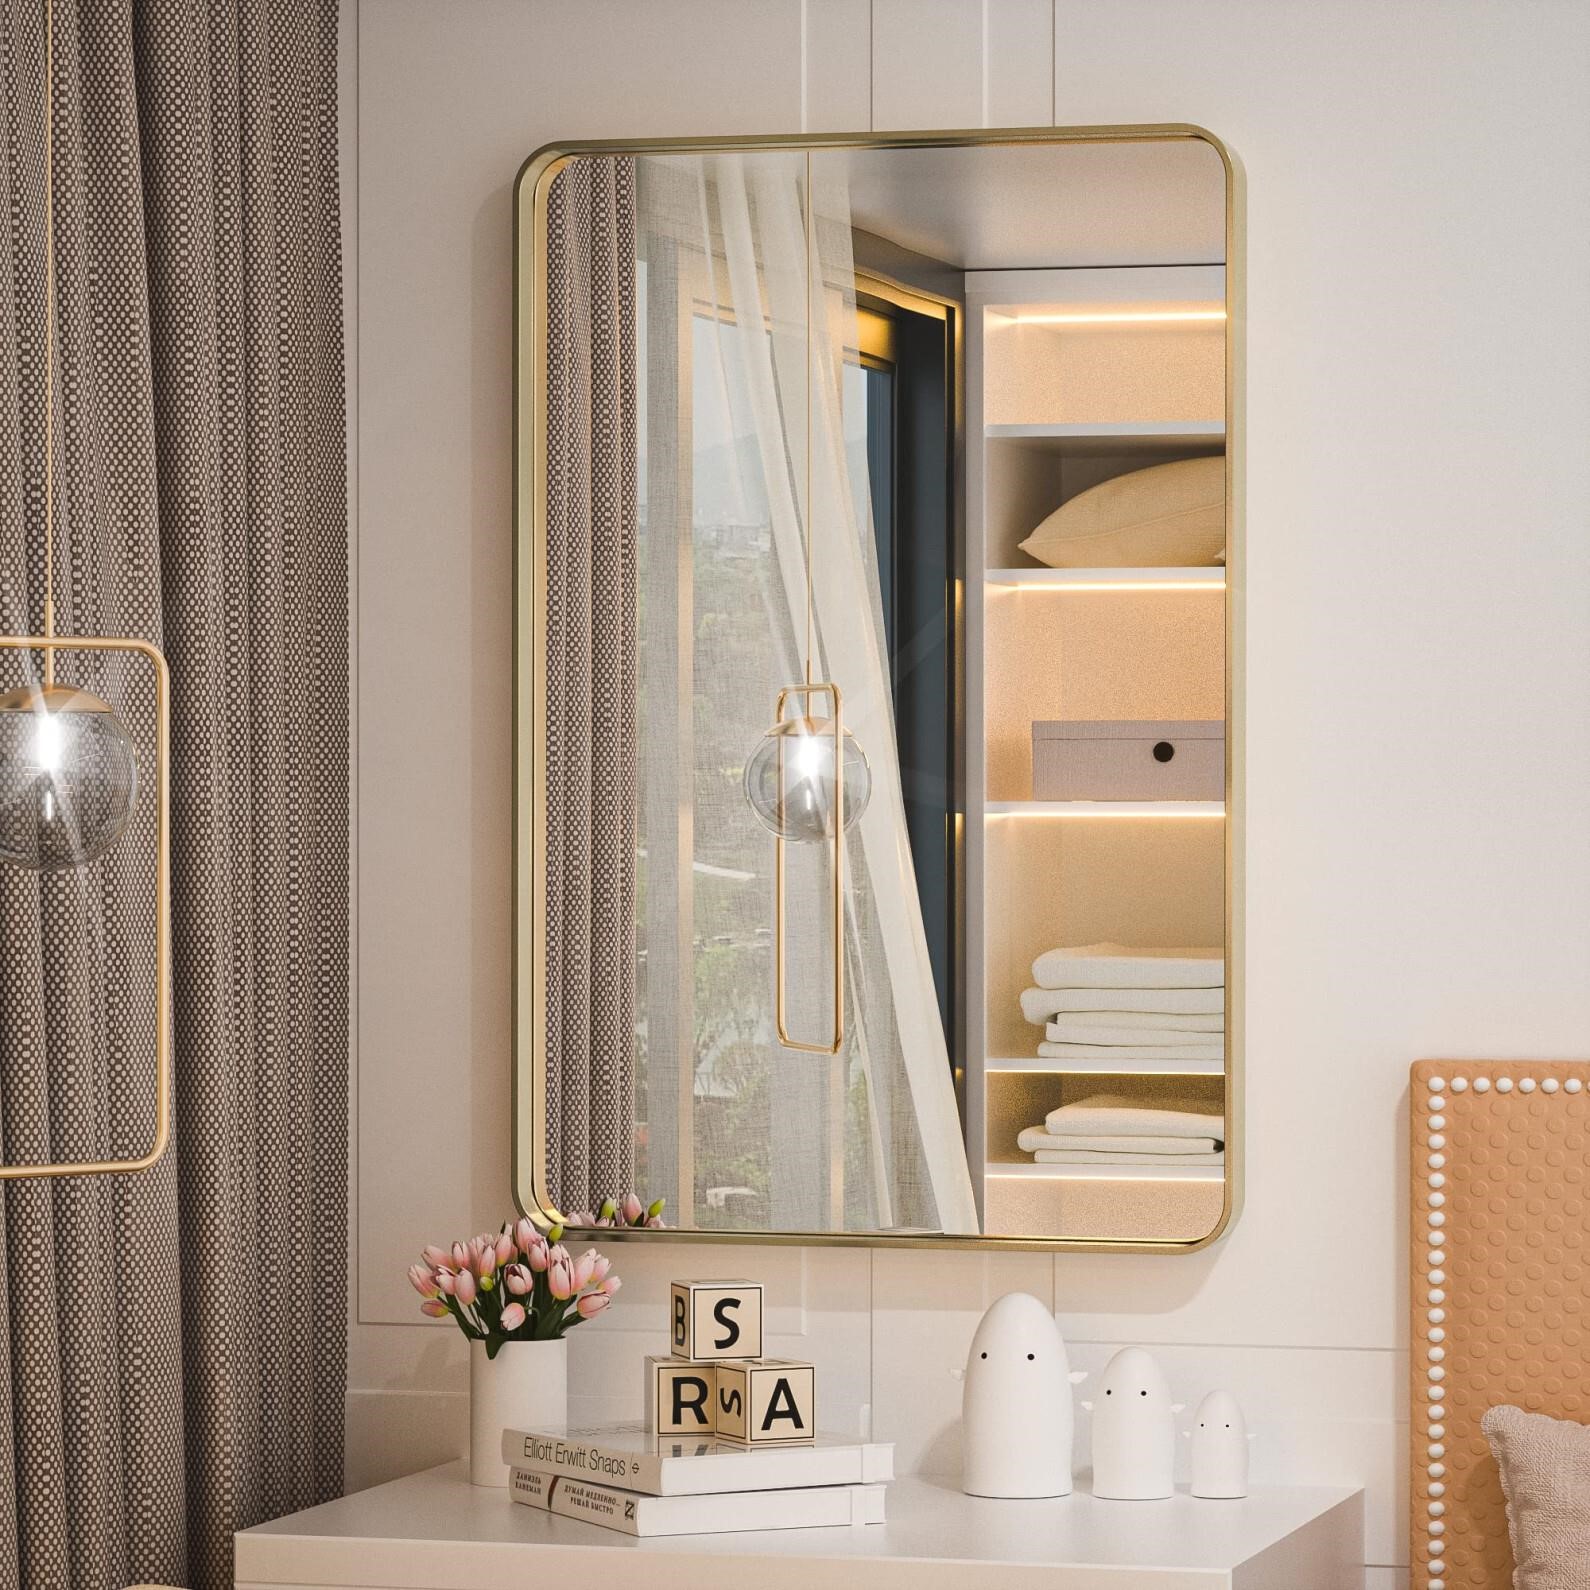 TETOTE Brushed Gold Bathroom Mirror, 24x36 Inch M